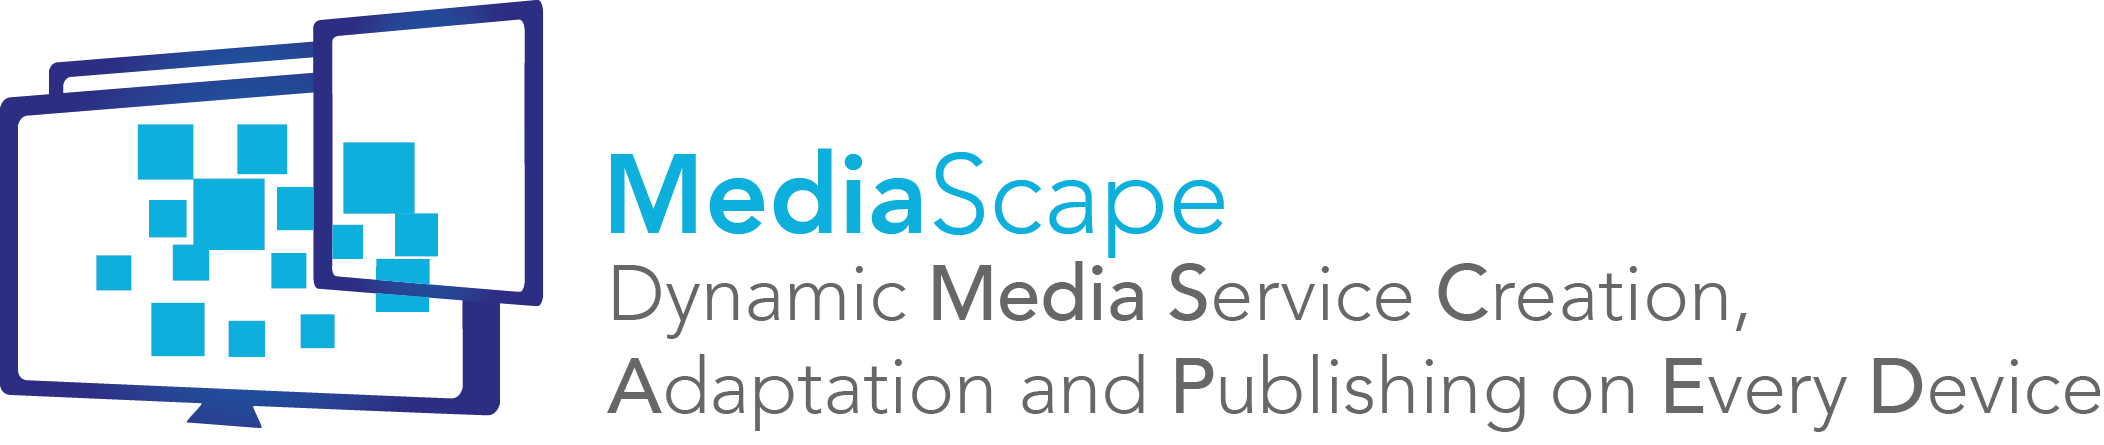 MediaScape EU project